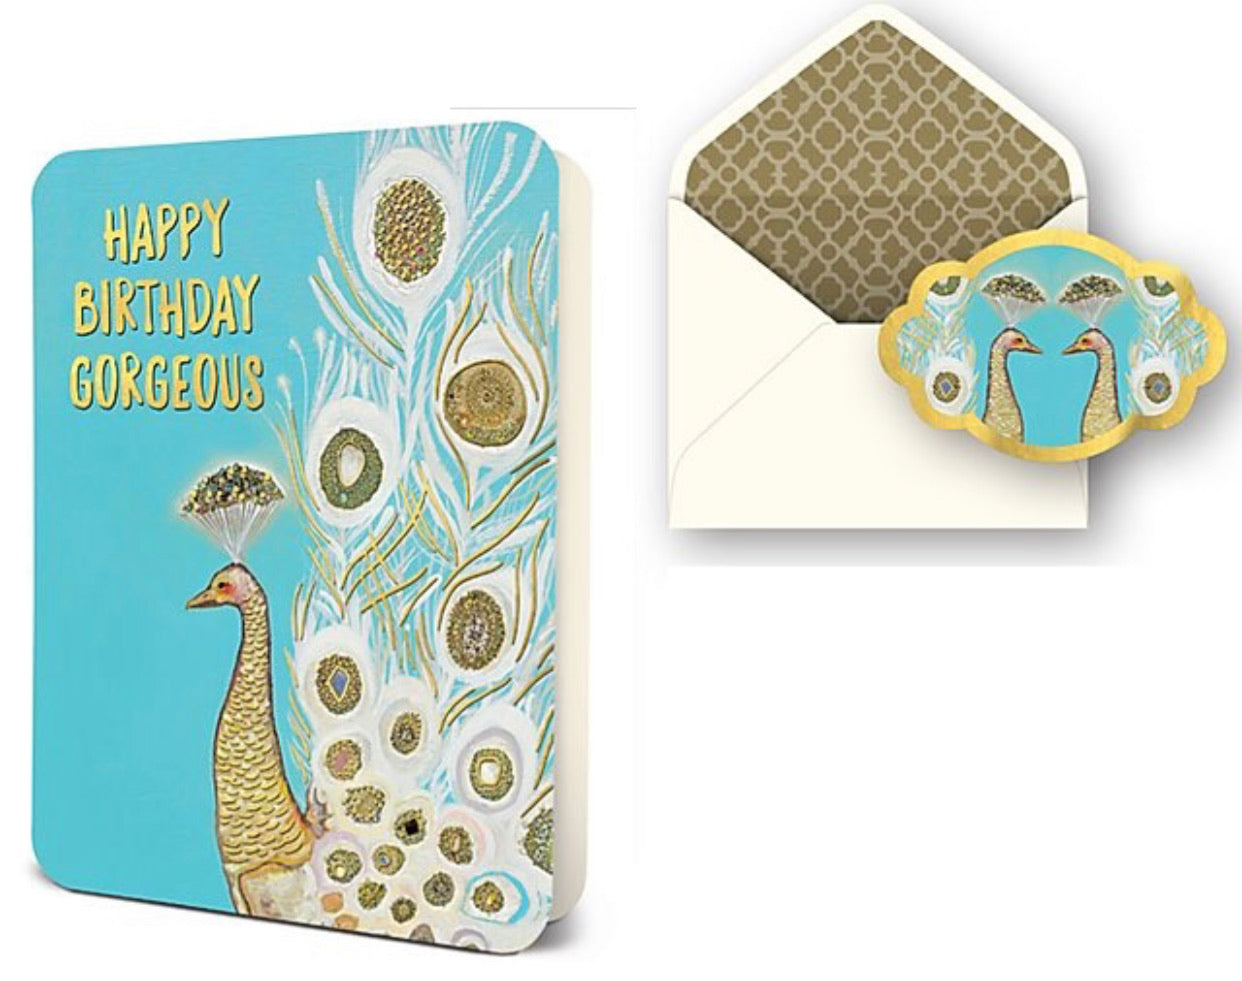 Happy Birthday Gorgeous Peacock Card